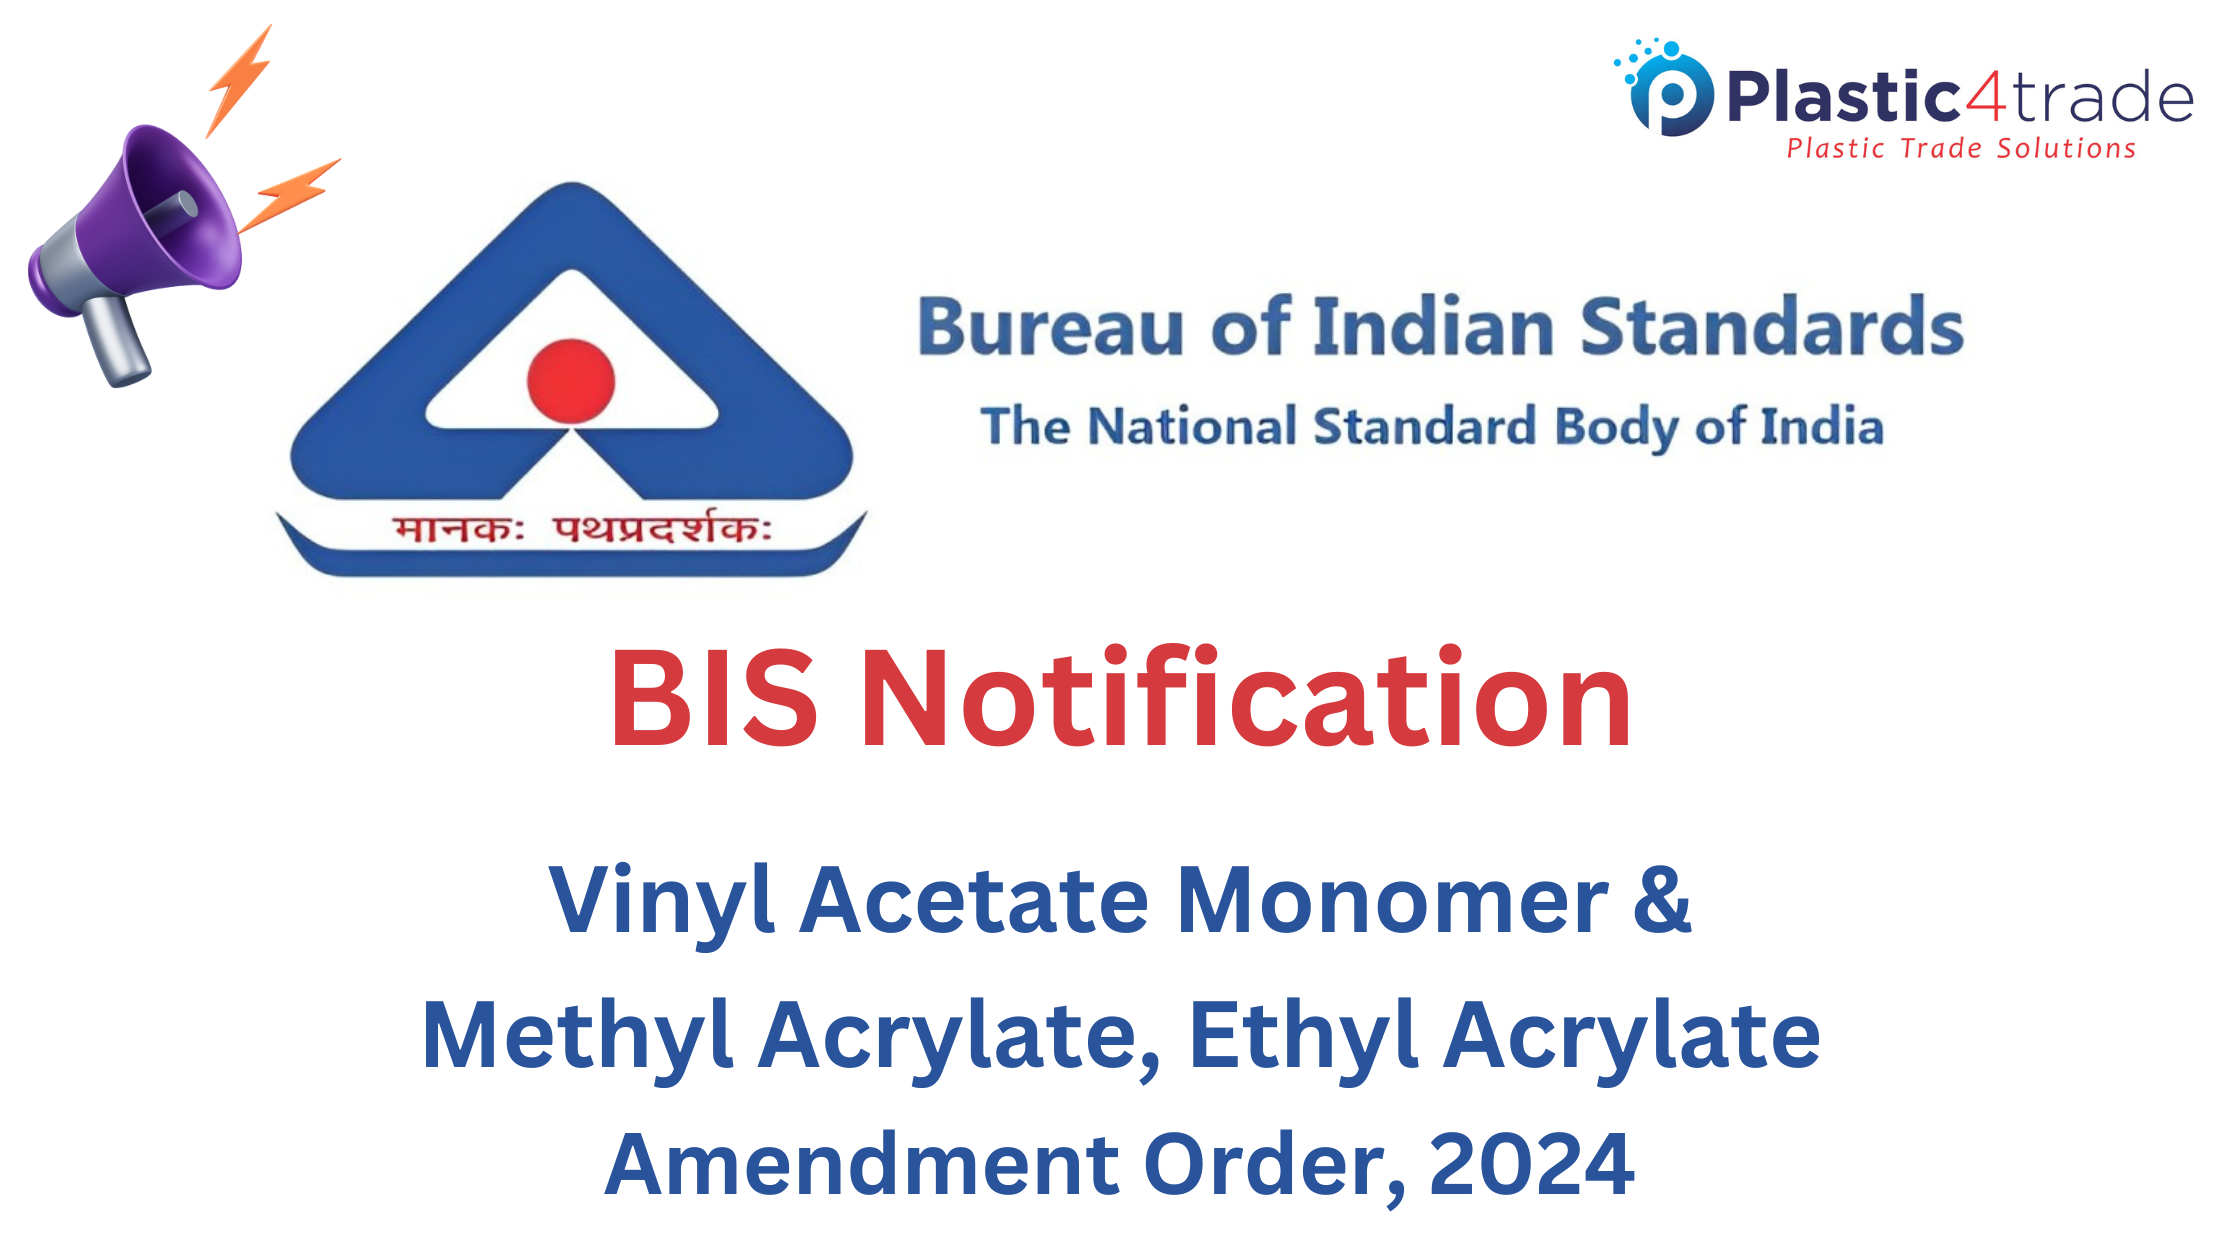 BIS Notification on Vinyl Acetate Monomer and Methyl Acrylate, Ethyl Acrylate Plastic4trade